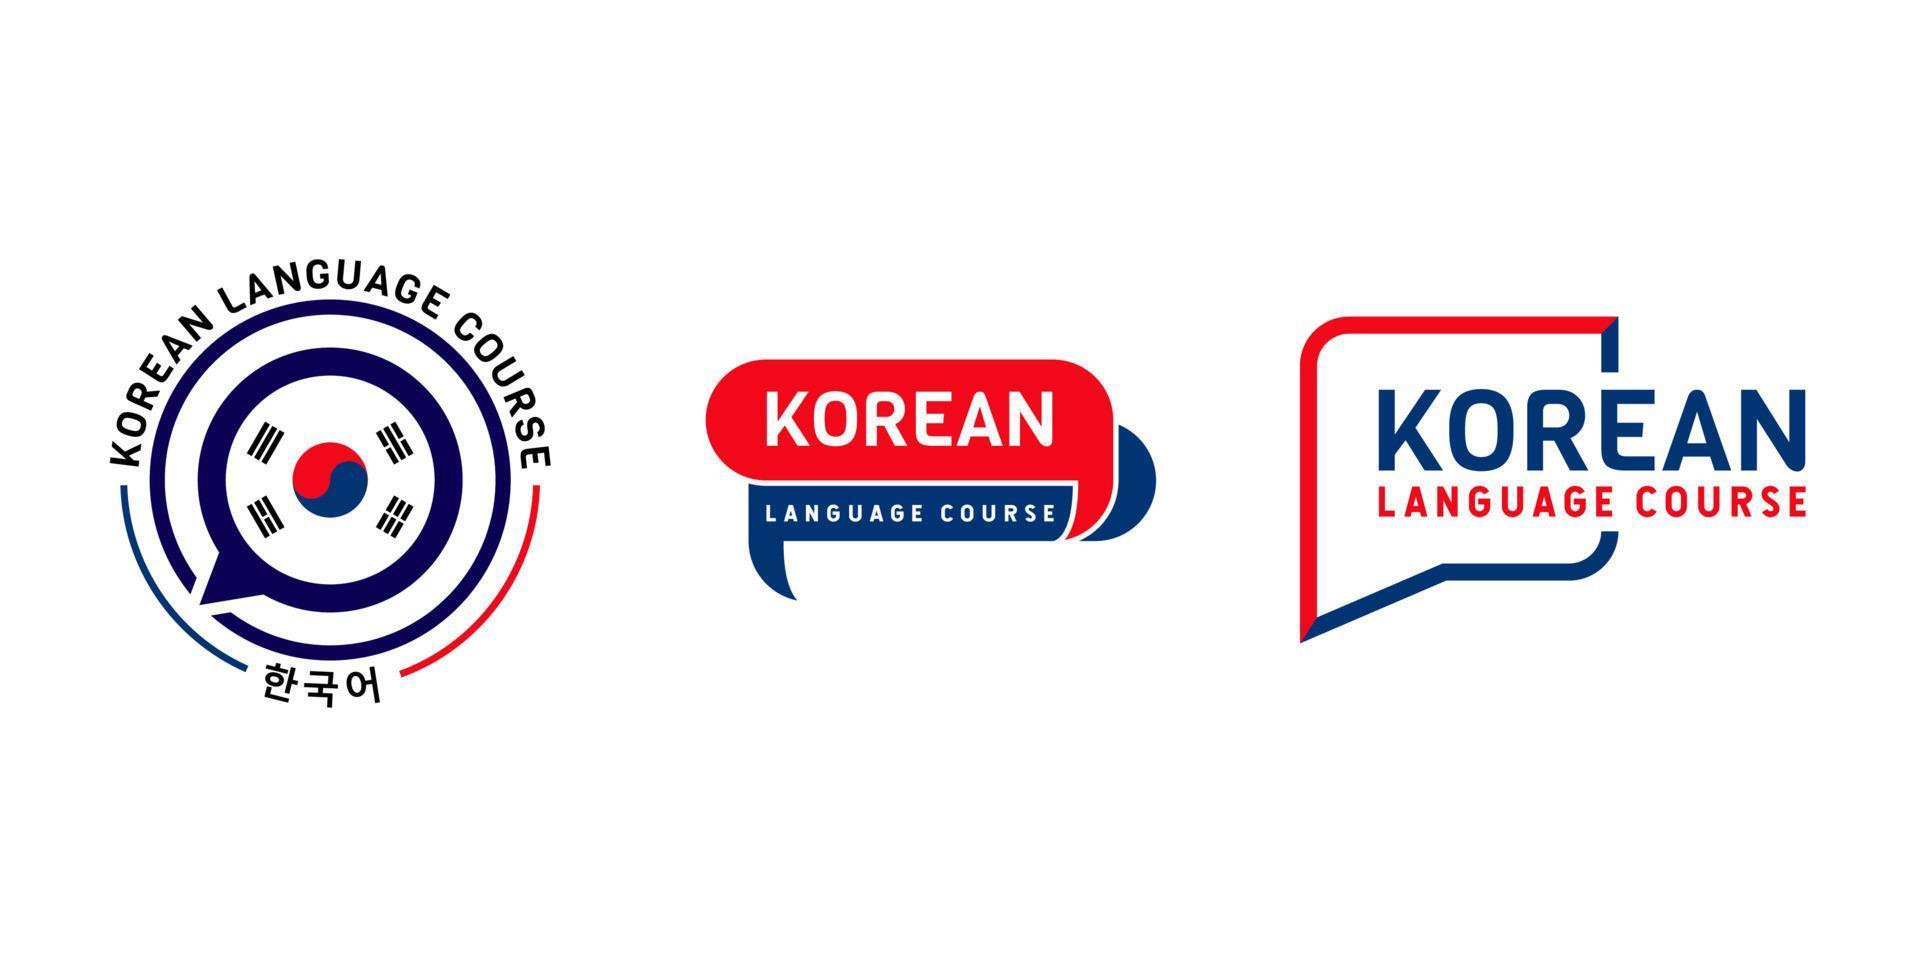 Learning Korean Language Course Logo. language exchange program, forum, speech bubble, and international communication sign. With South Korea Flag. Premium and luxury vector illustration